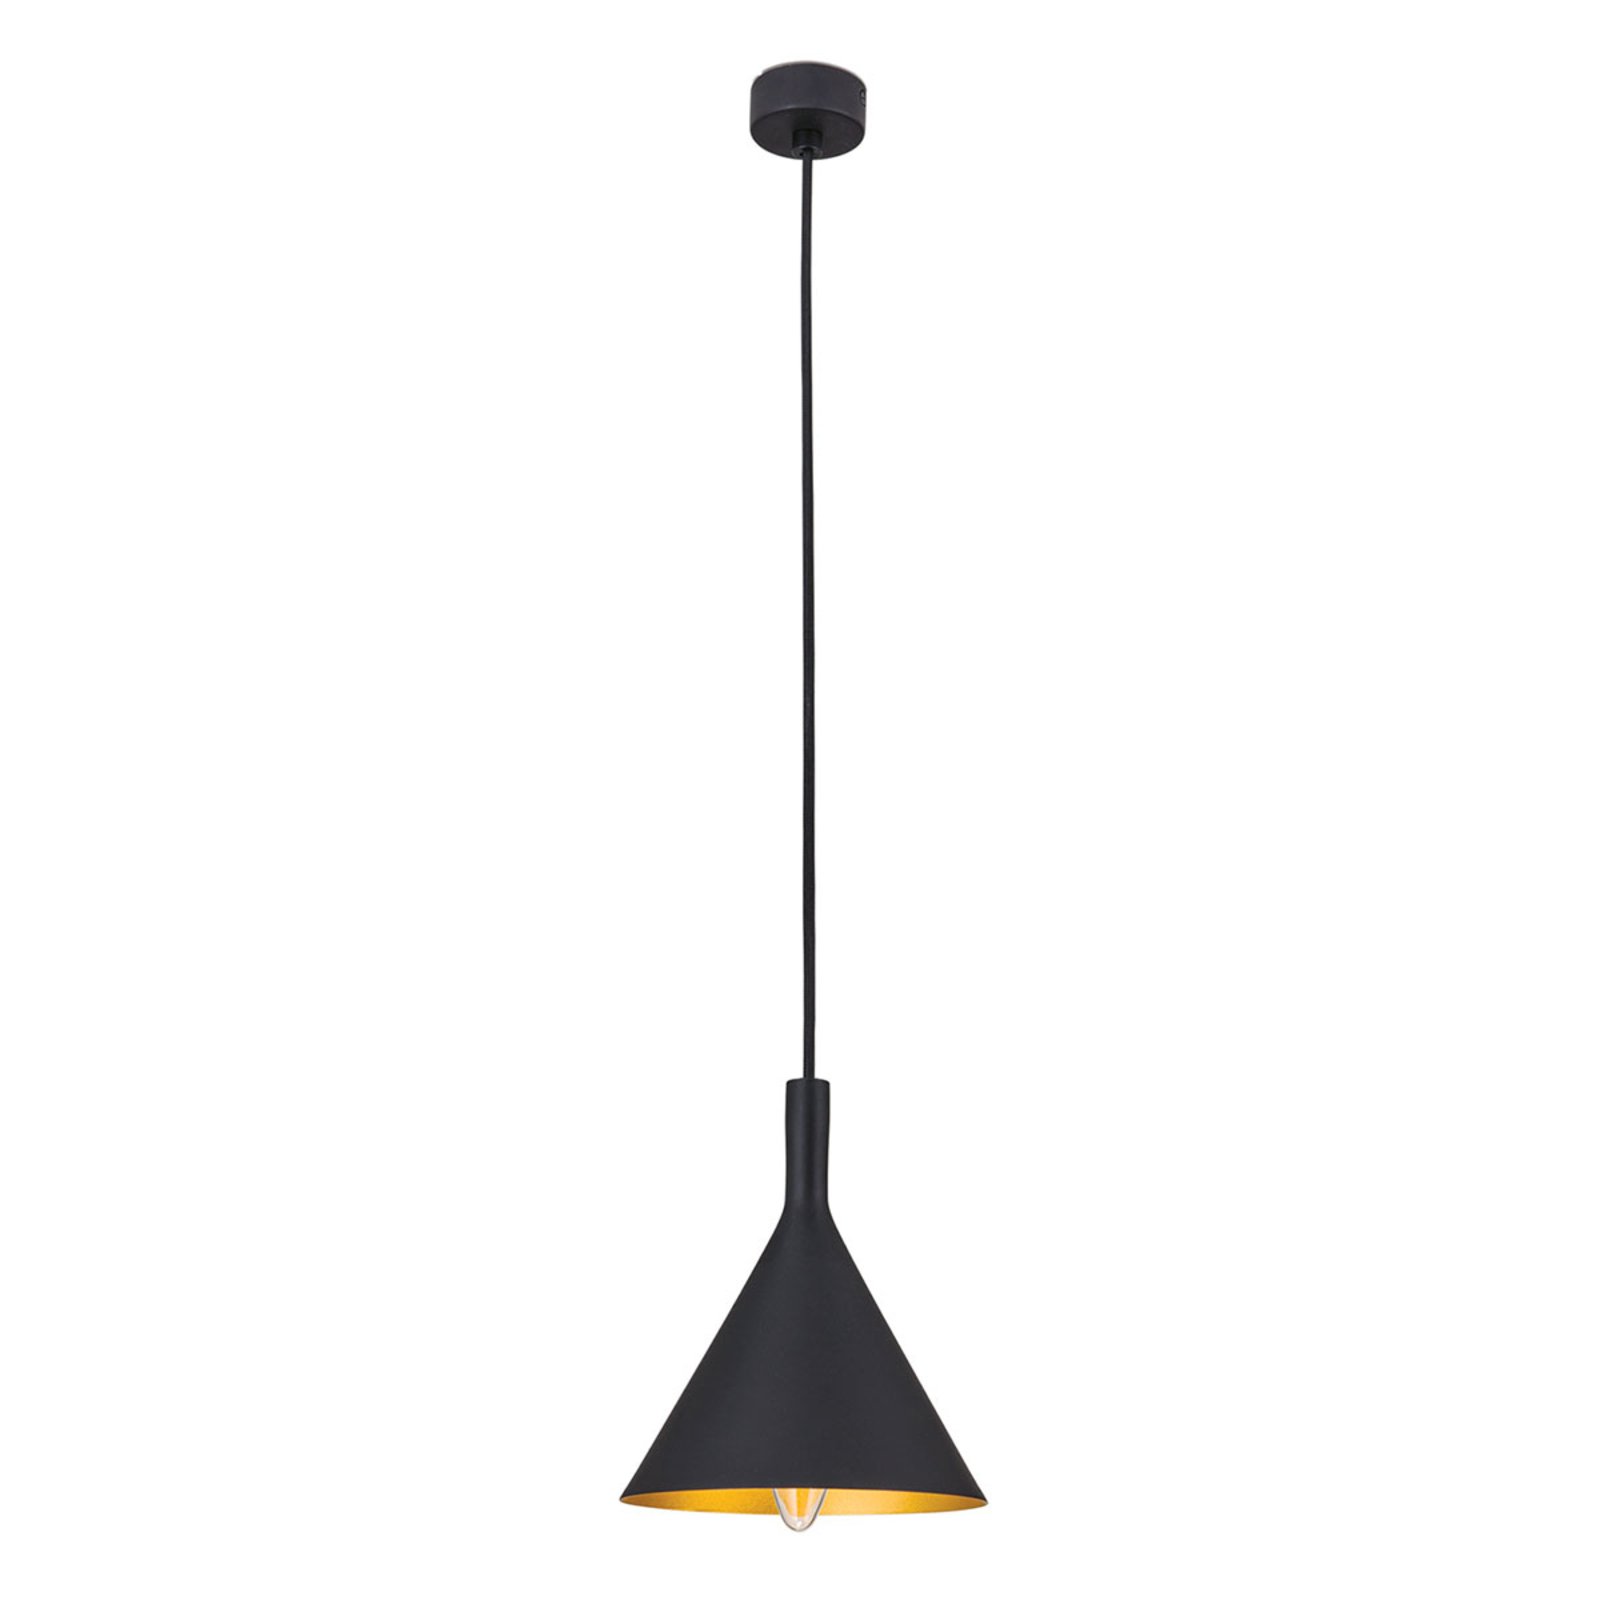 Cone-shaped hanging lamp Gunda in black and gold